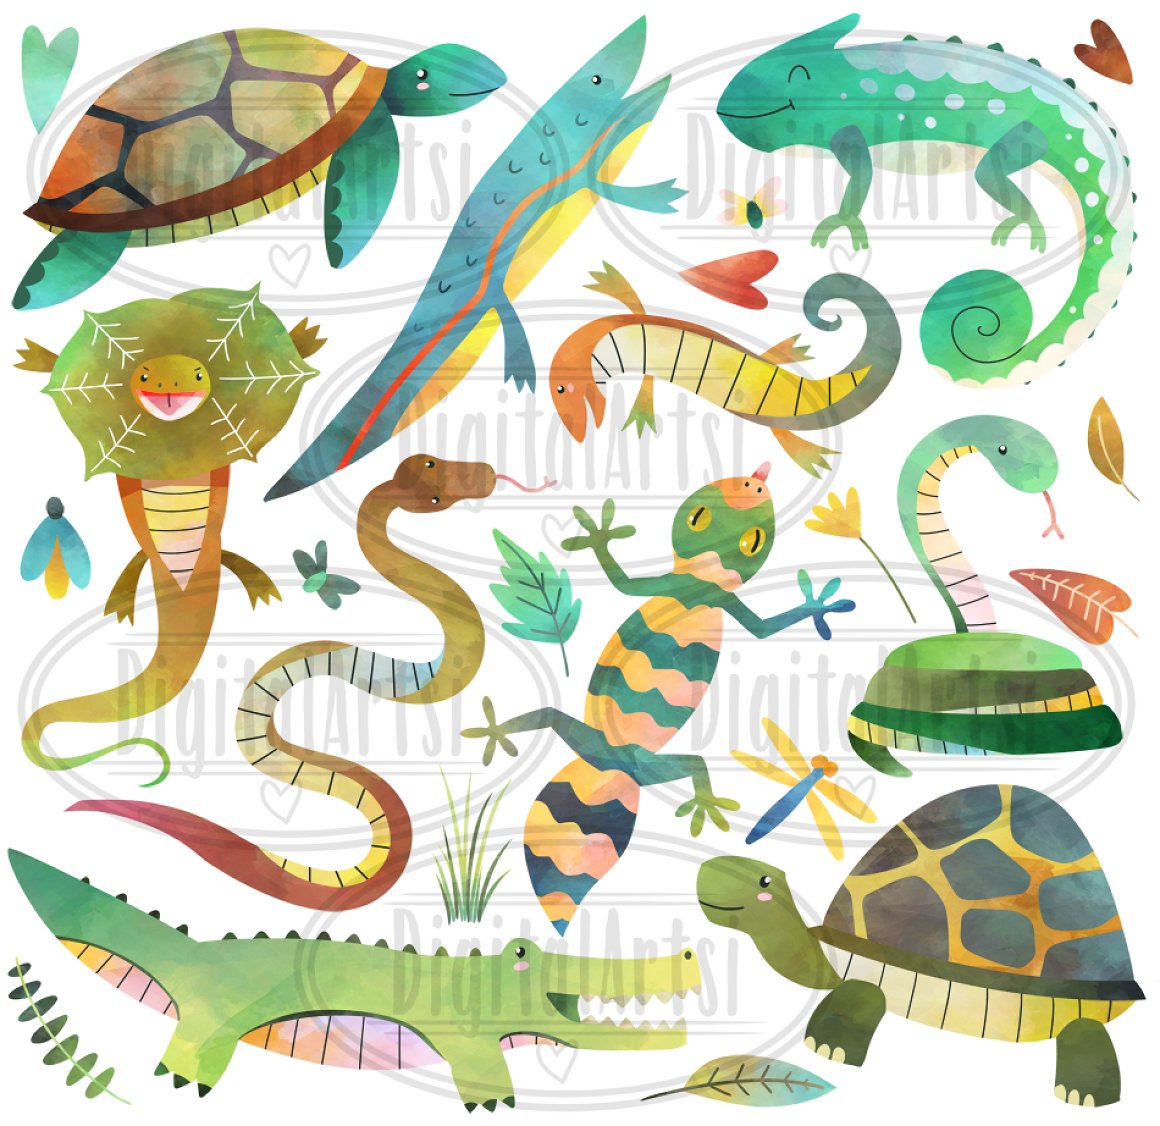 Watercolor Reptiles Clipart.